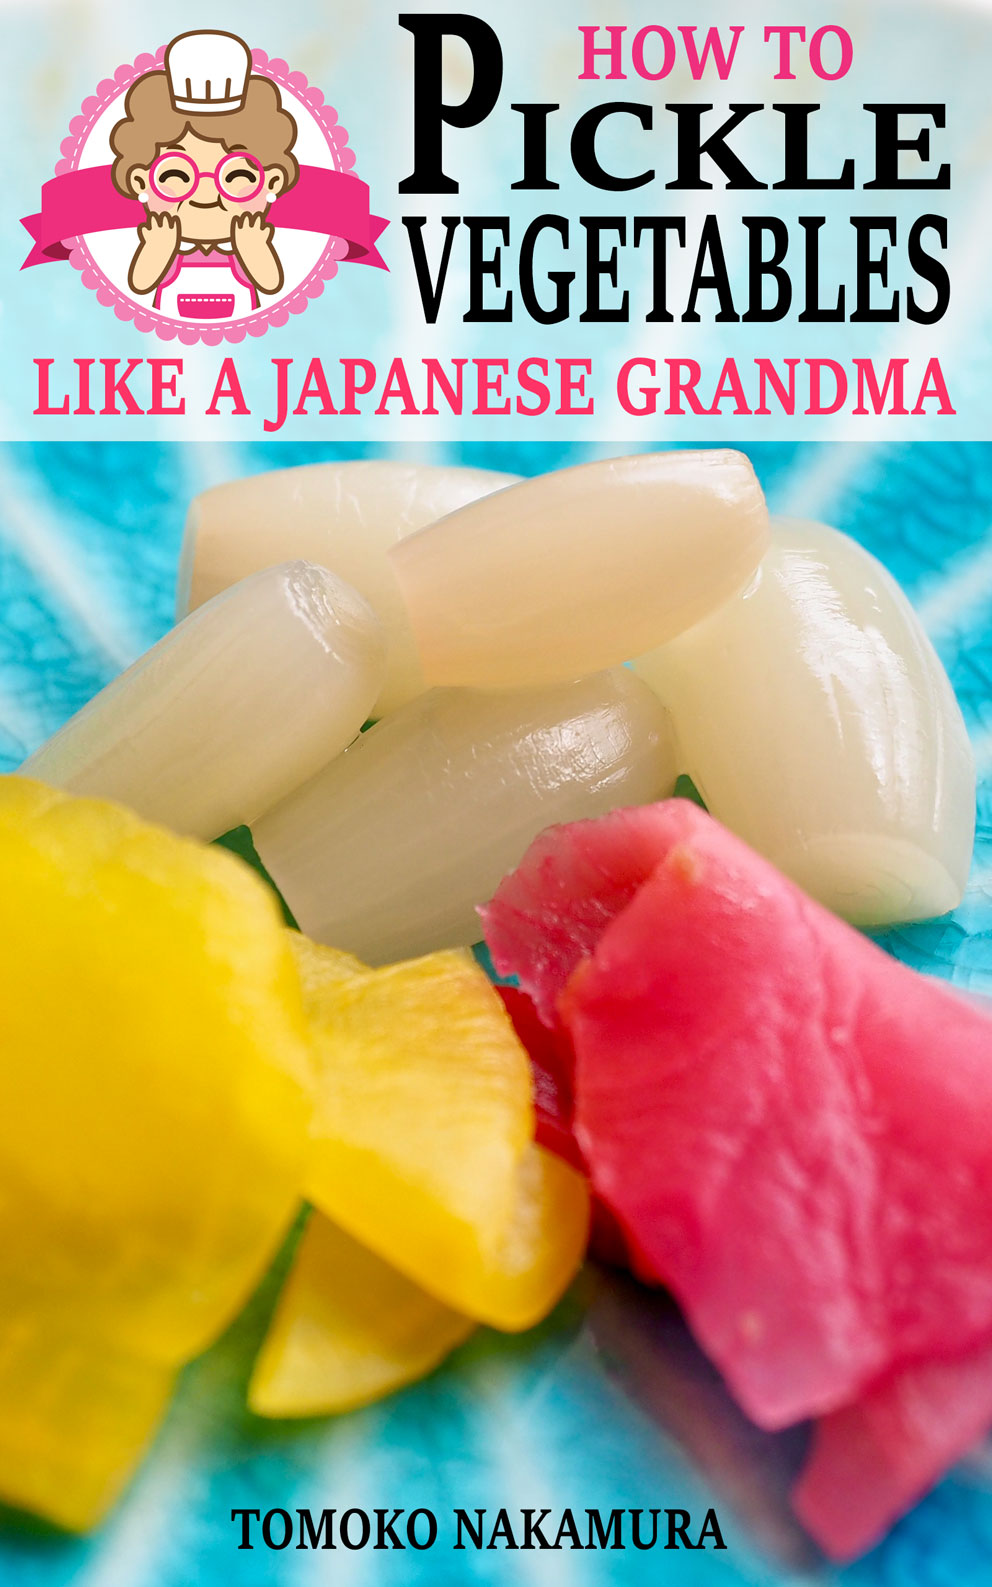 FREE: How to Pickle Vegetables Like a Japanese Grandma by Tomoko Nakamura